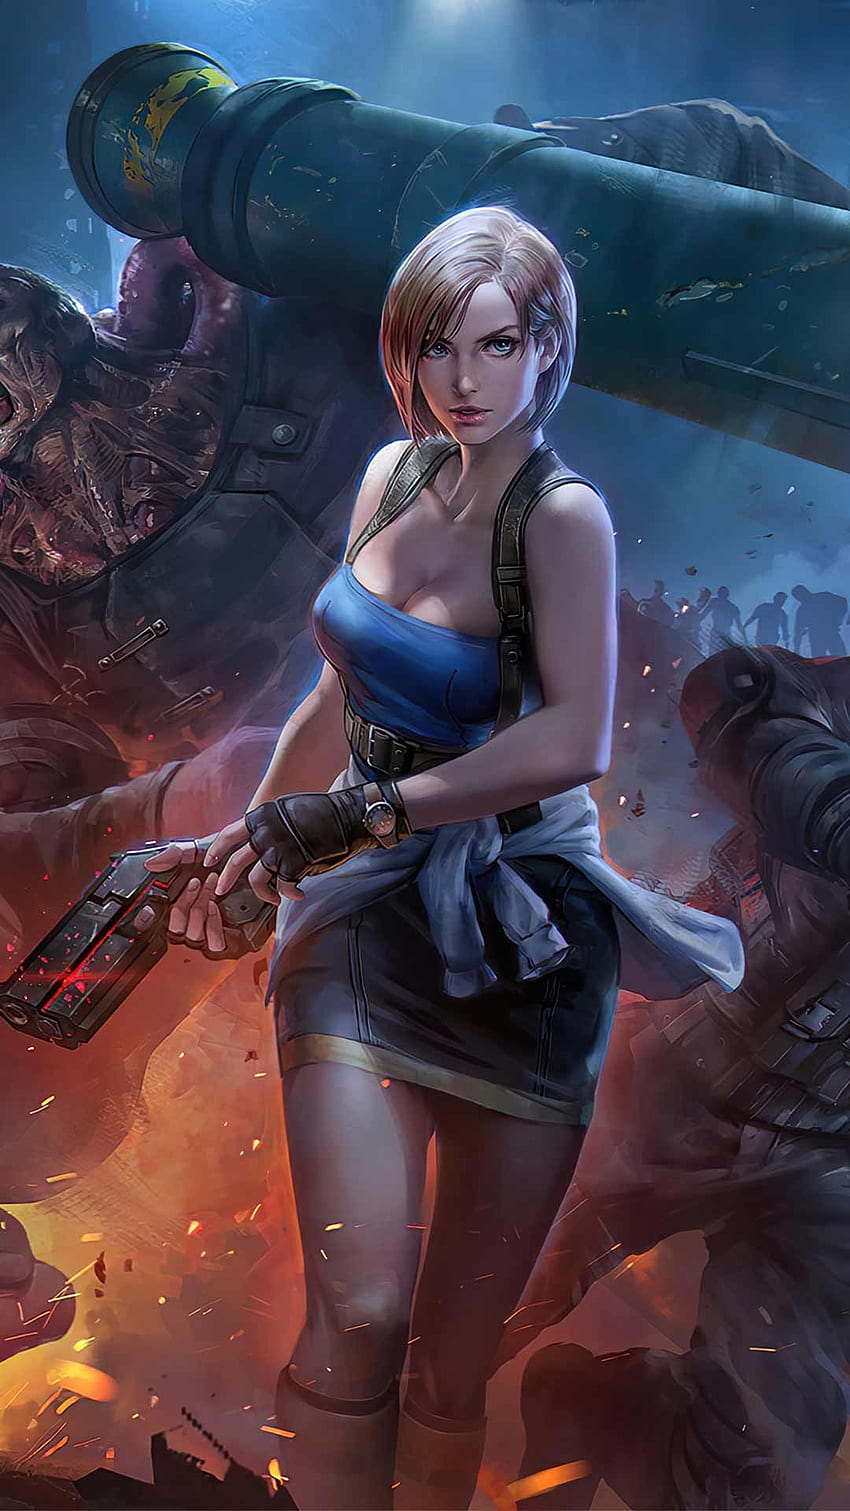 Jill valentine re3 remake phone background 2020 game art Poster on iPhone android in 2020. Resident evil girl, Evil anime et Jill valentine Fond d'écran de téléphone HD